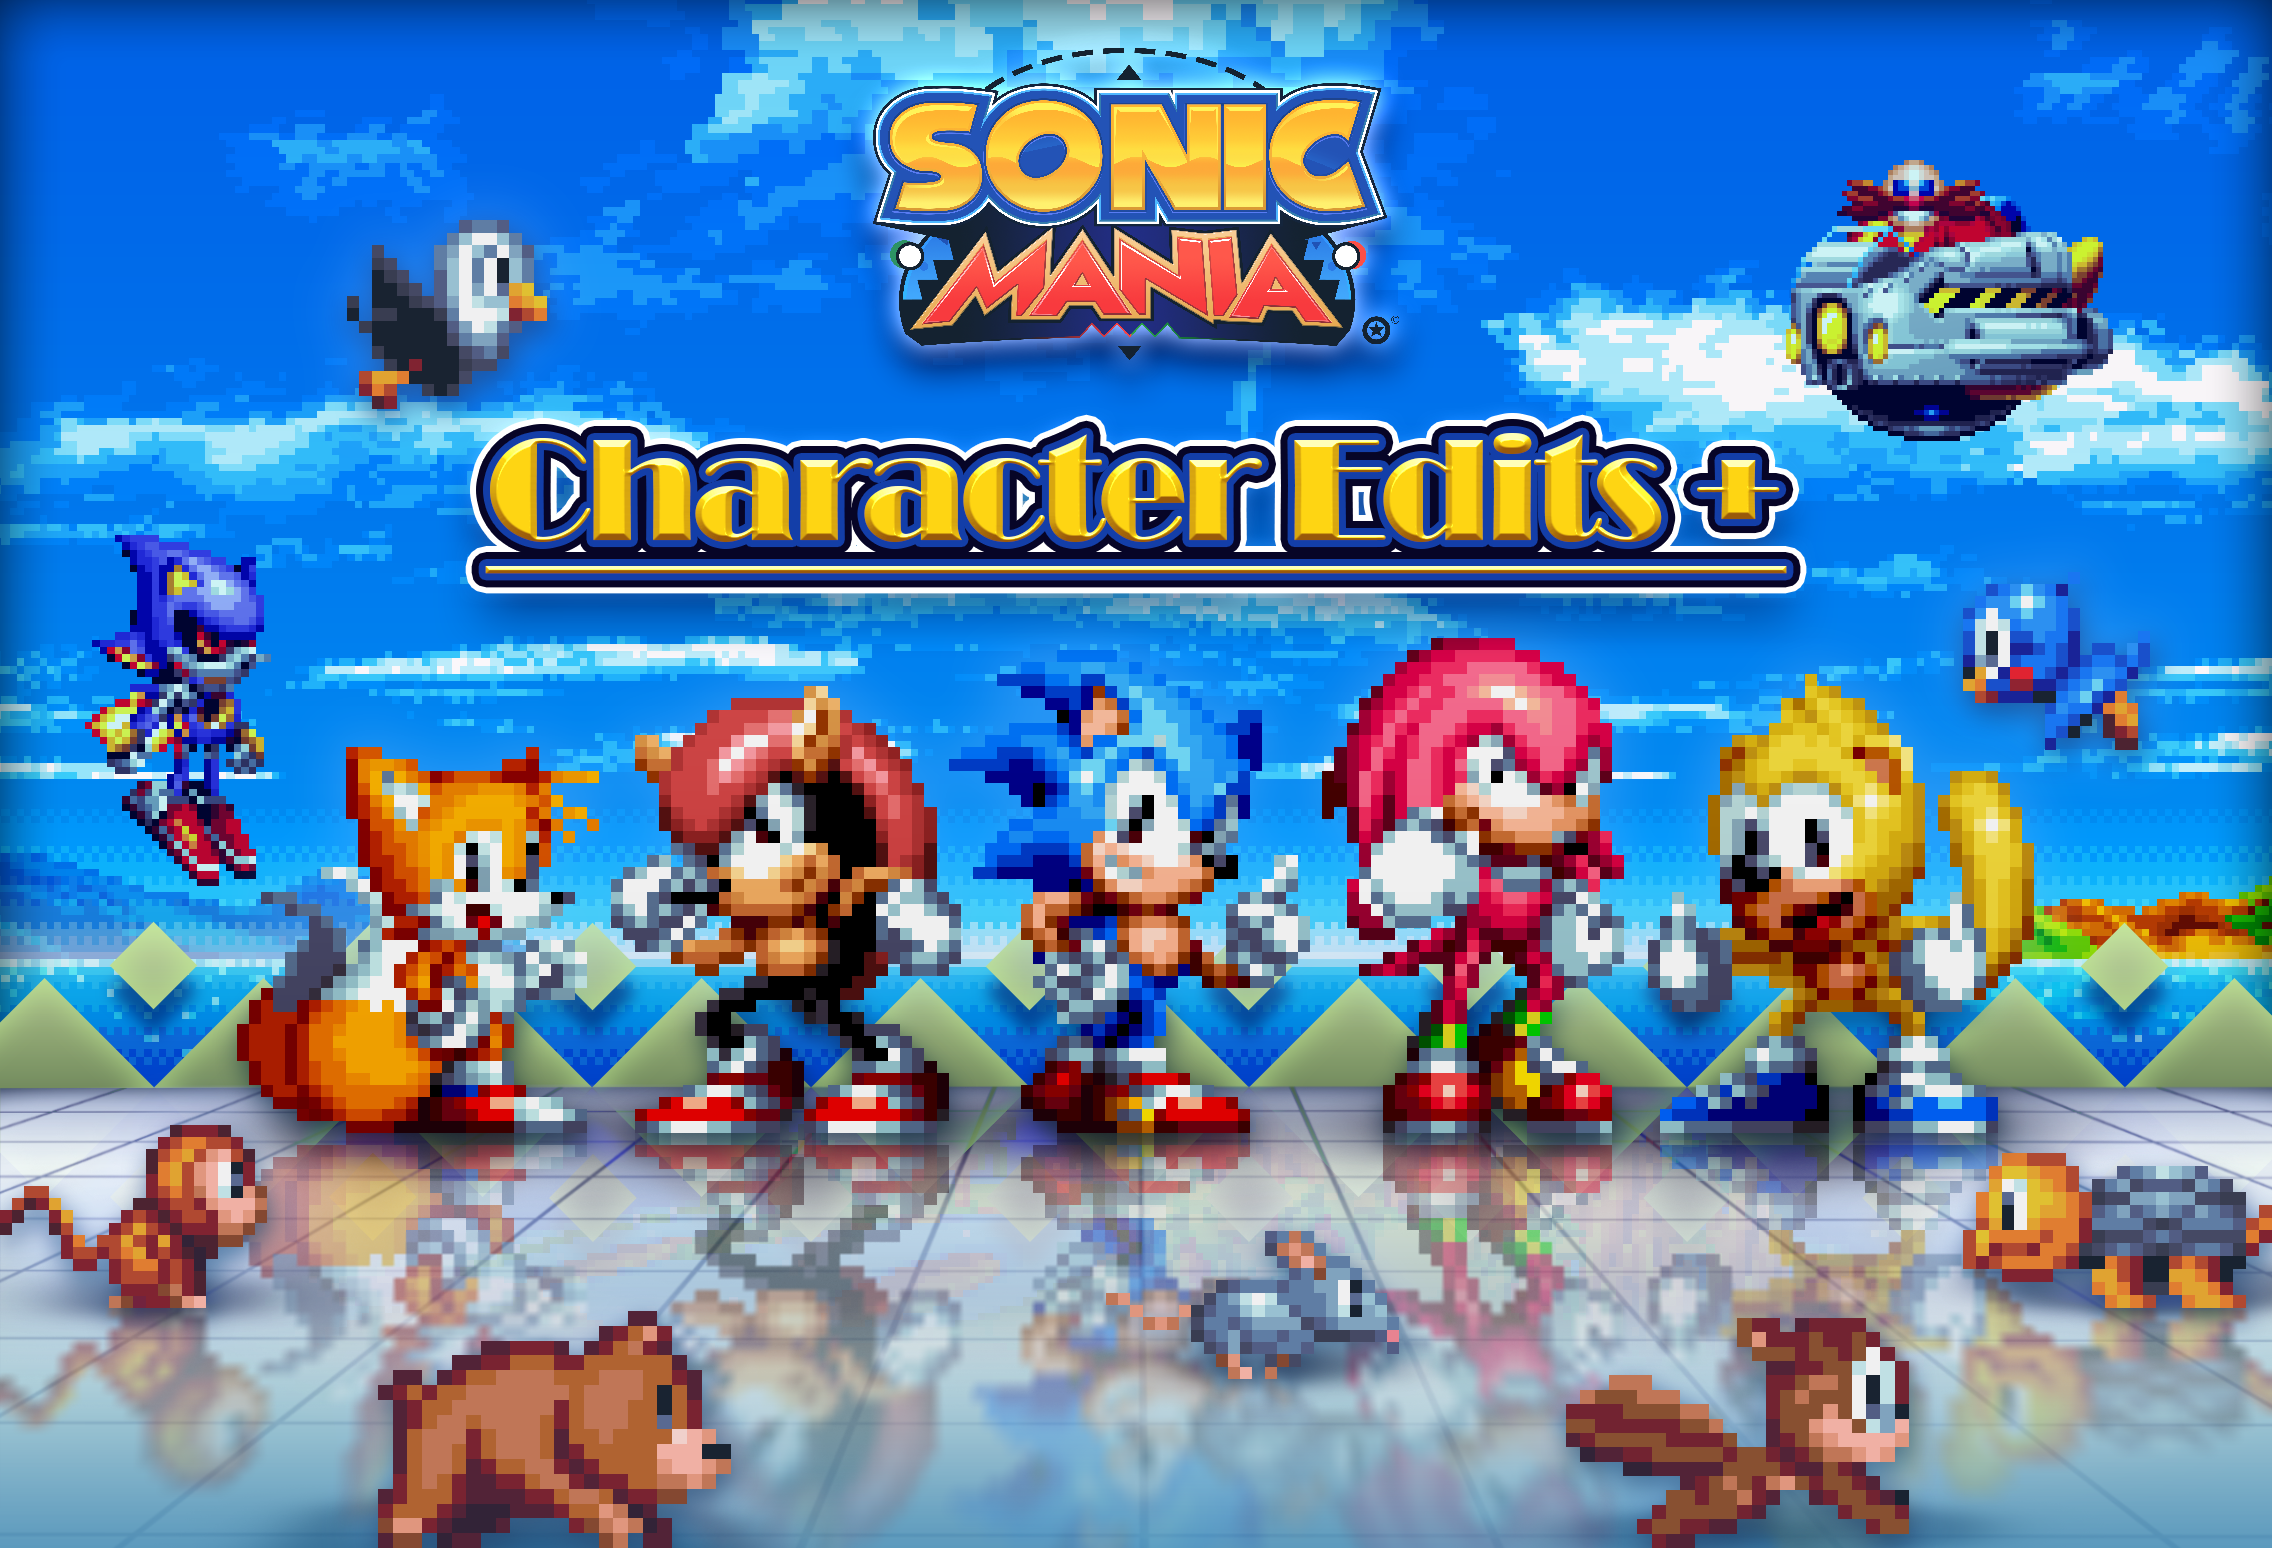 Chaotix Mania Plus [Sonic Mania] [Mods]